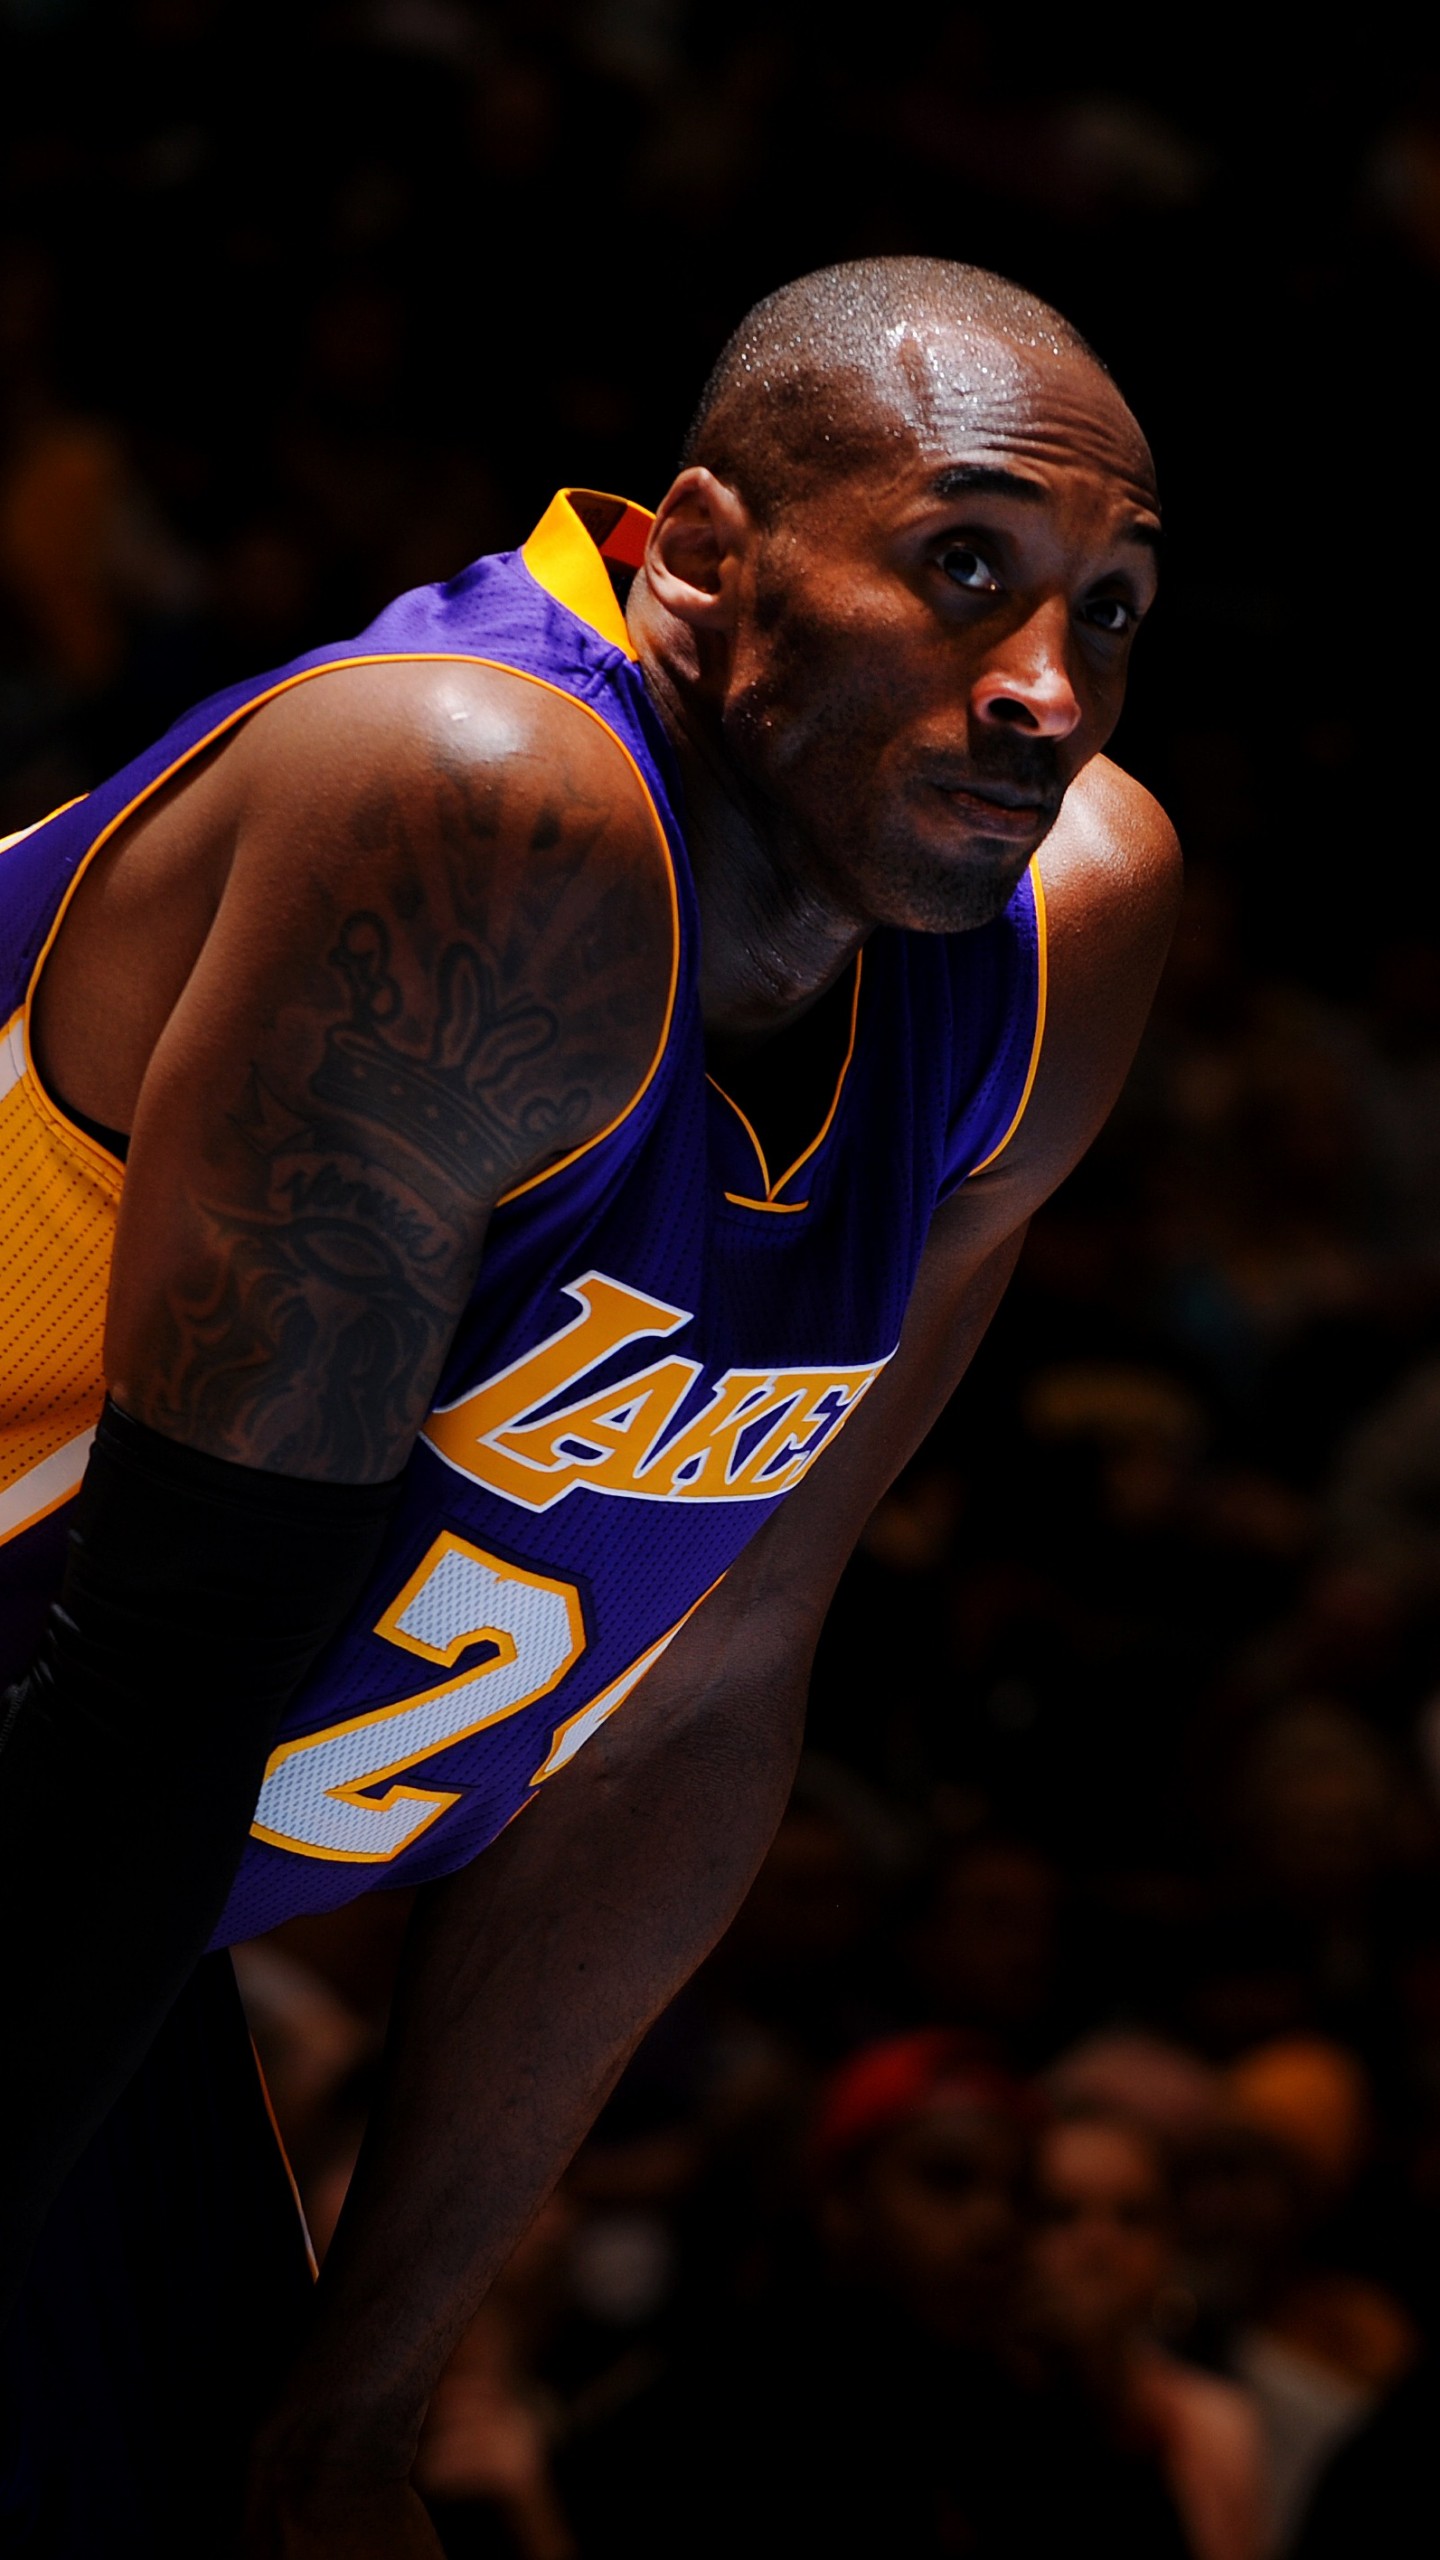 Wallpaper NBA, Kobe Bryant, Best Basketball Players of 2015, Los Angeles Lakers, basketball ...